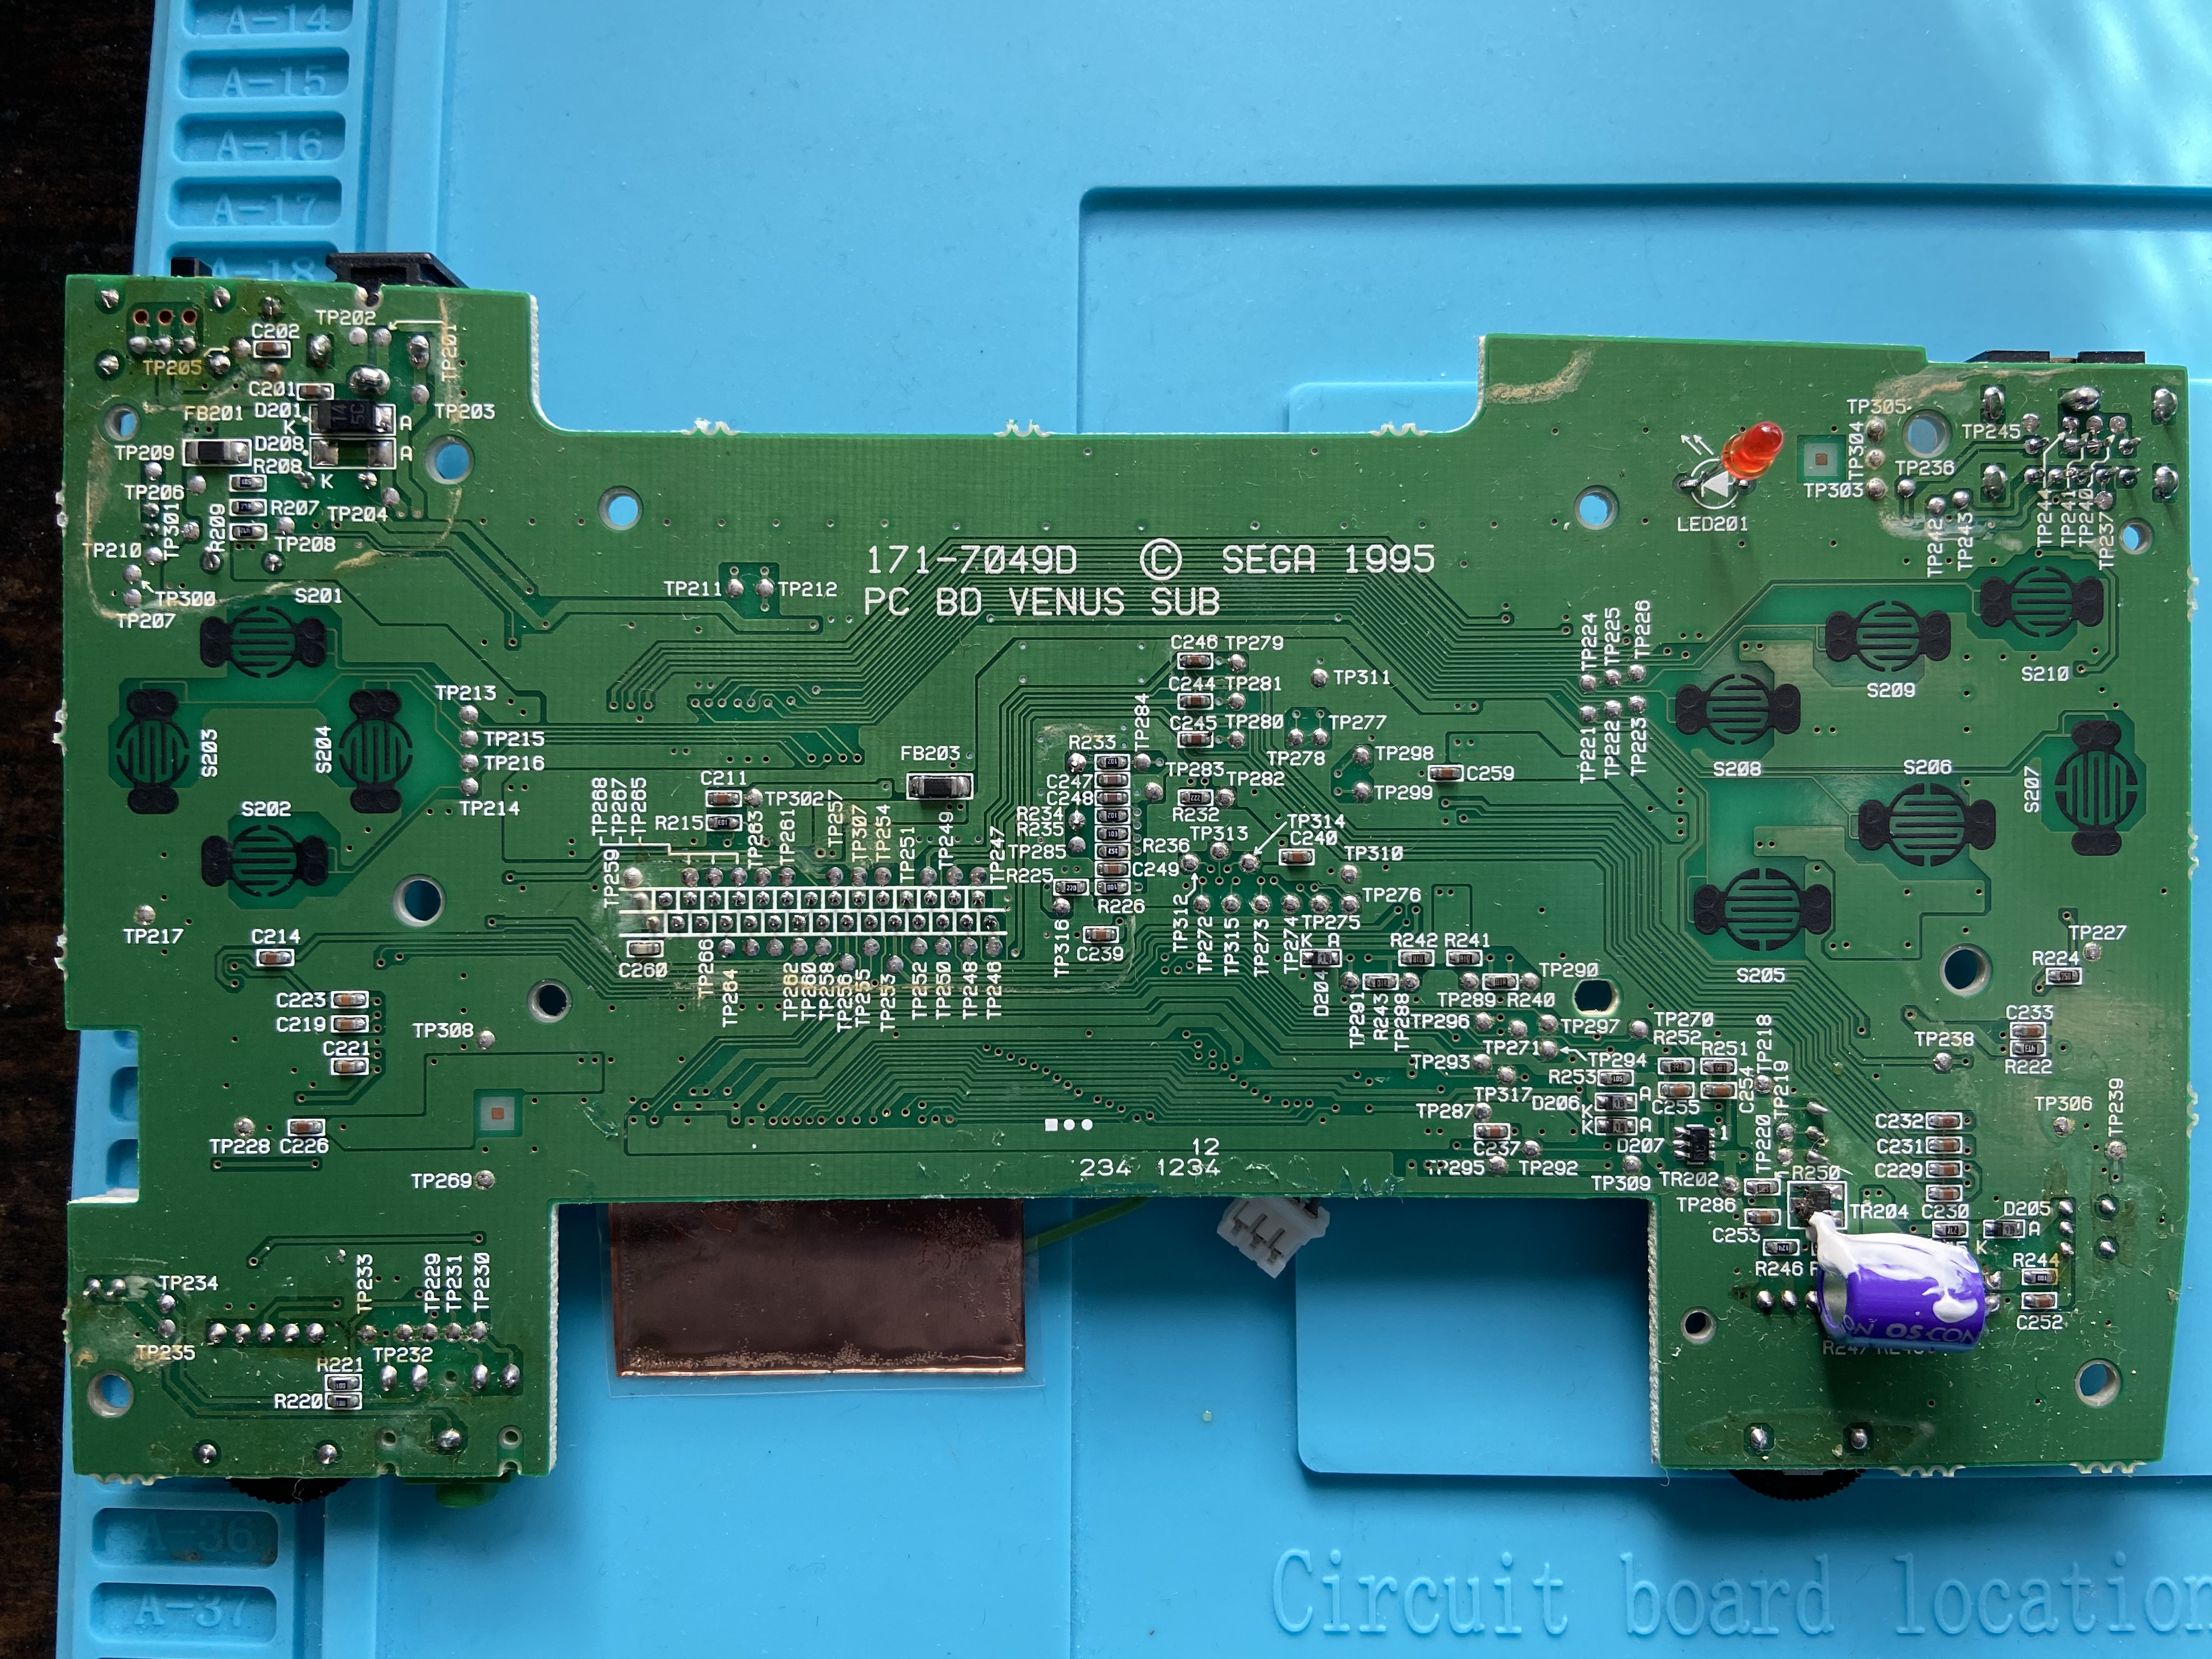 Sega Nomad sub board with stock screen removed